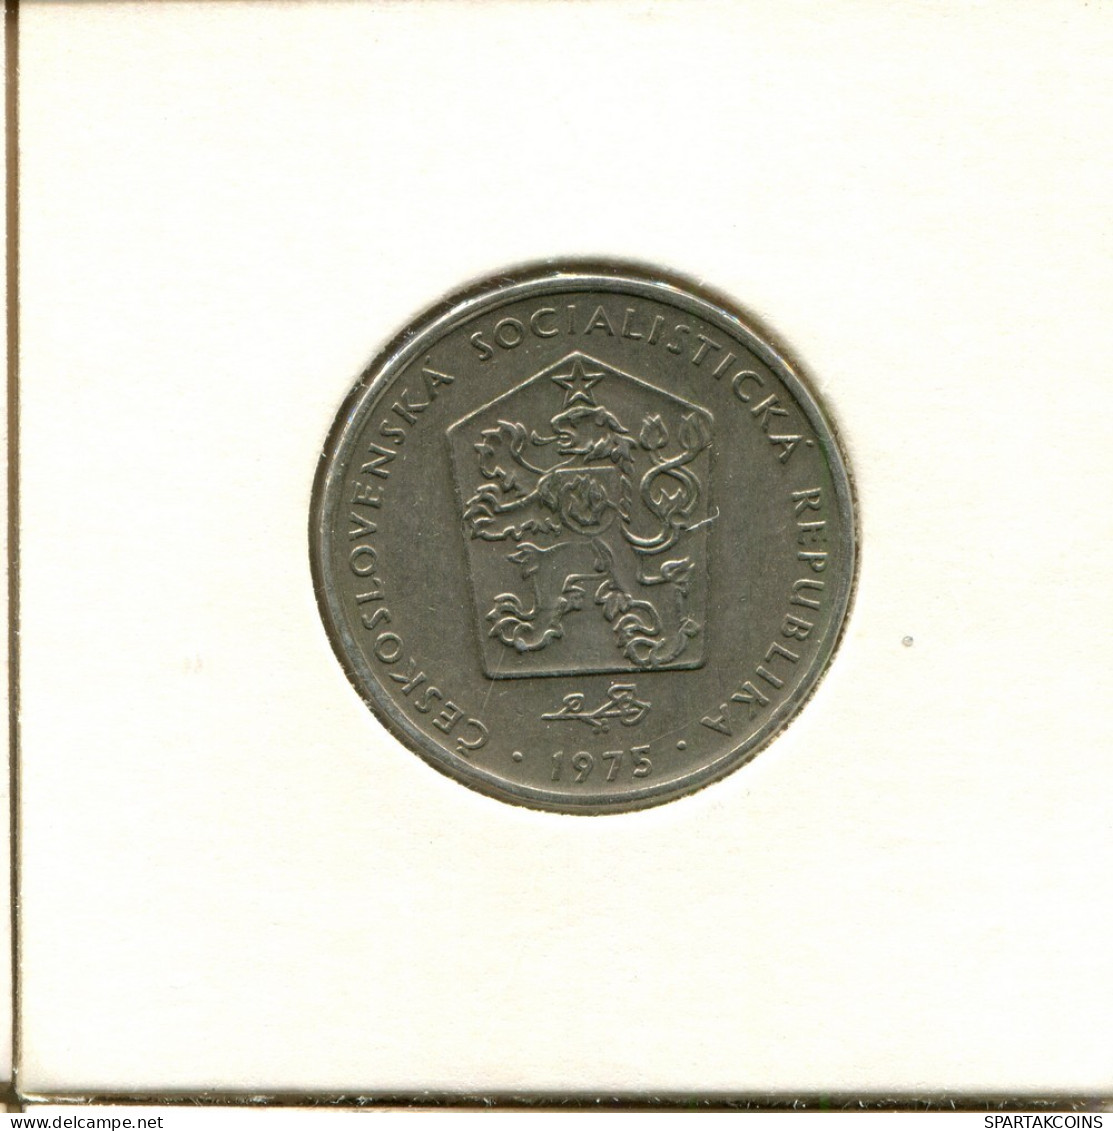 2 KORUN 1975 CHECOSLOVAQUIA CZECHOESLOVAQUIA SLOVAKIA Moneda #AZ955.E.A - Tschechoslowakei